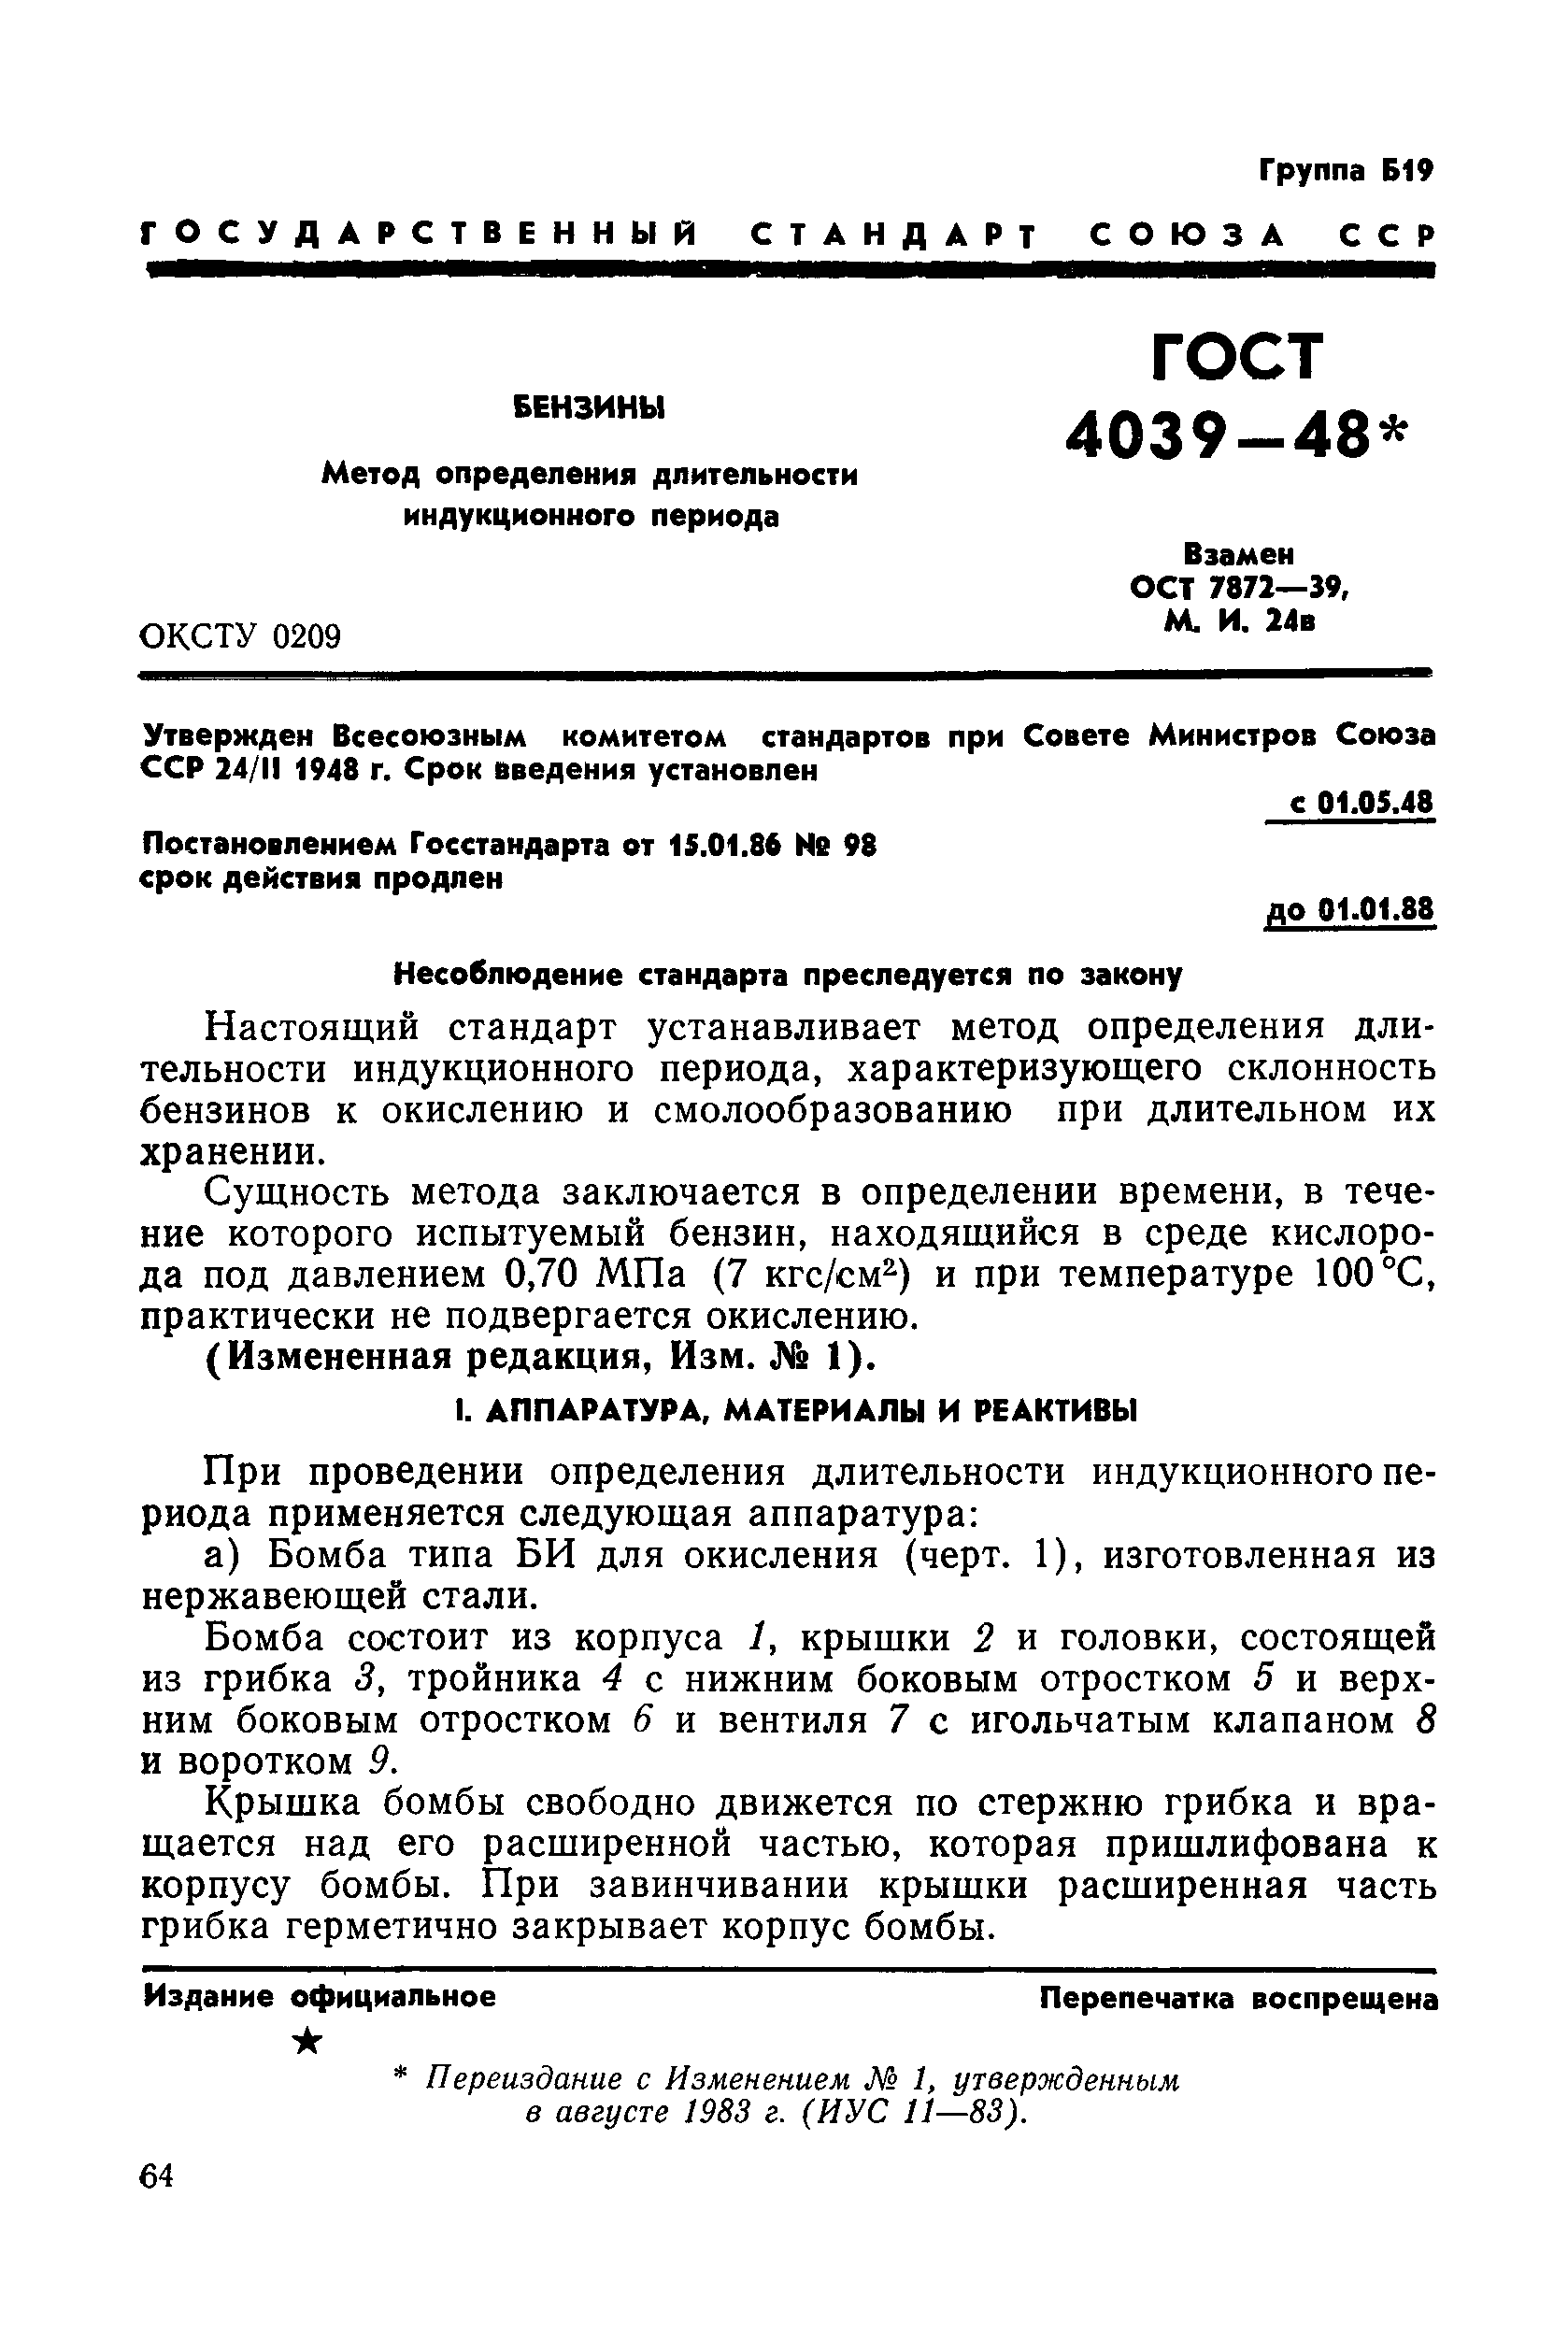 ГОСТ 4039-48